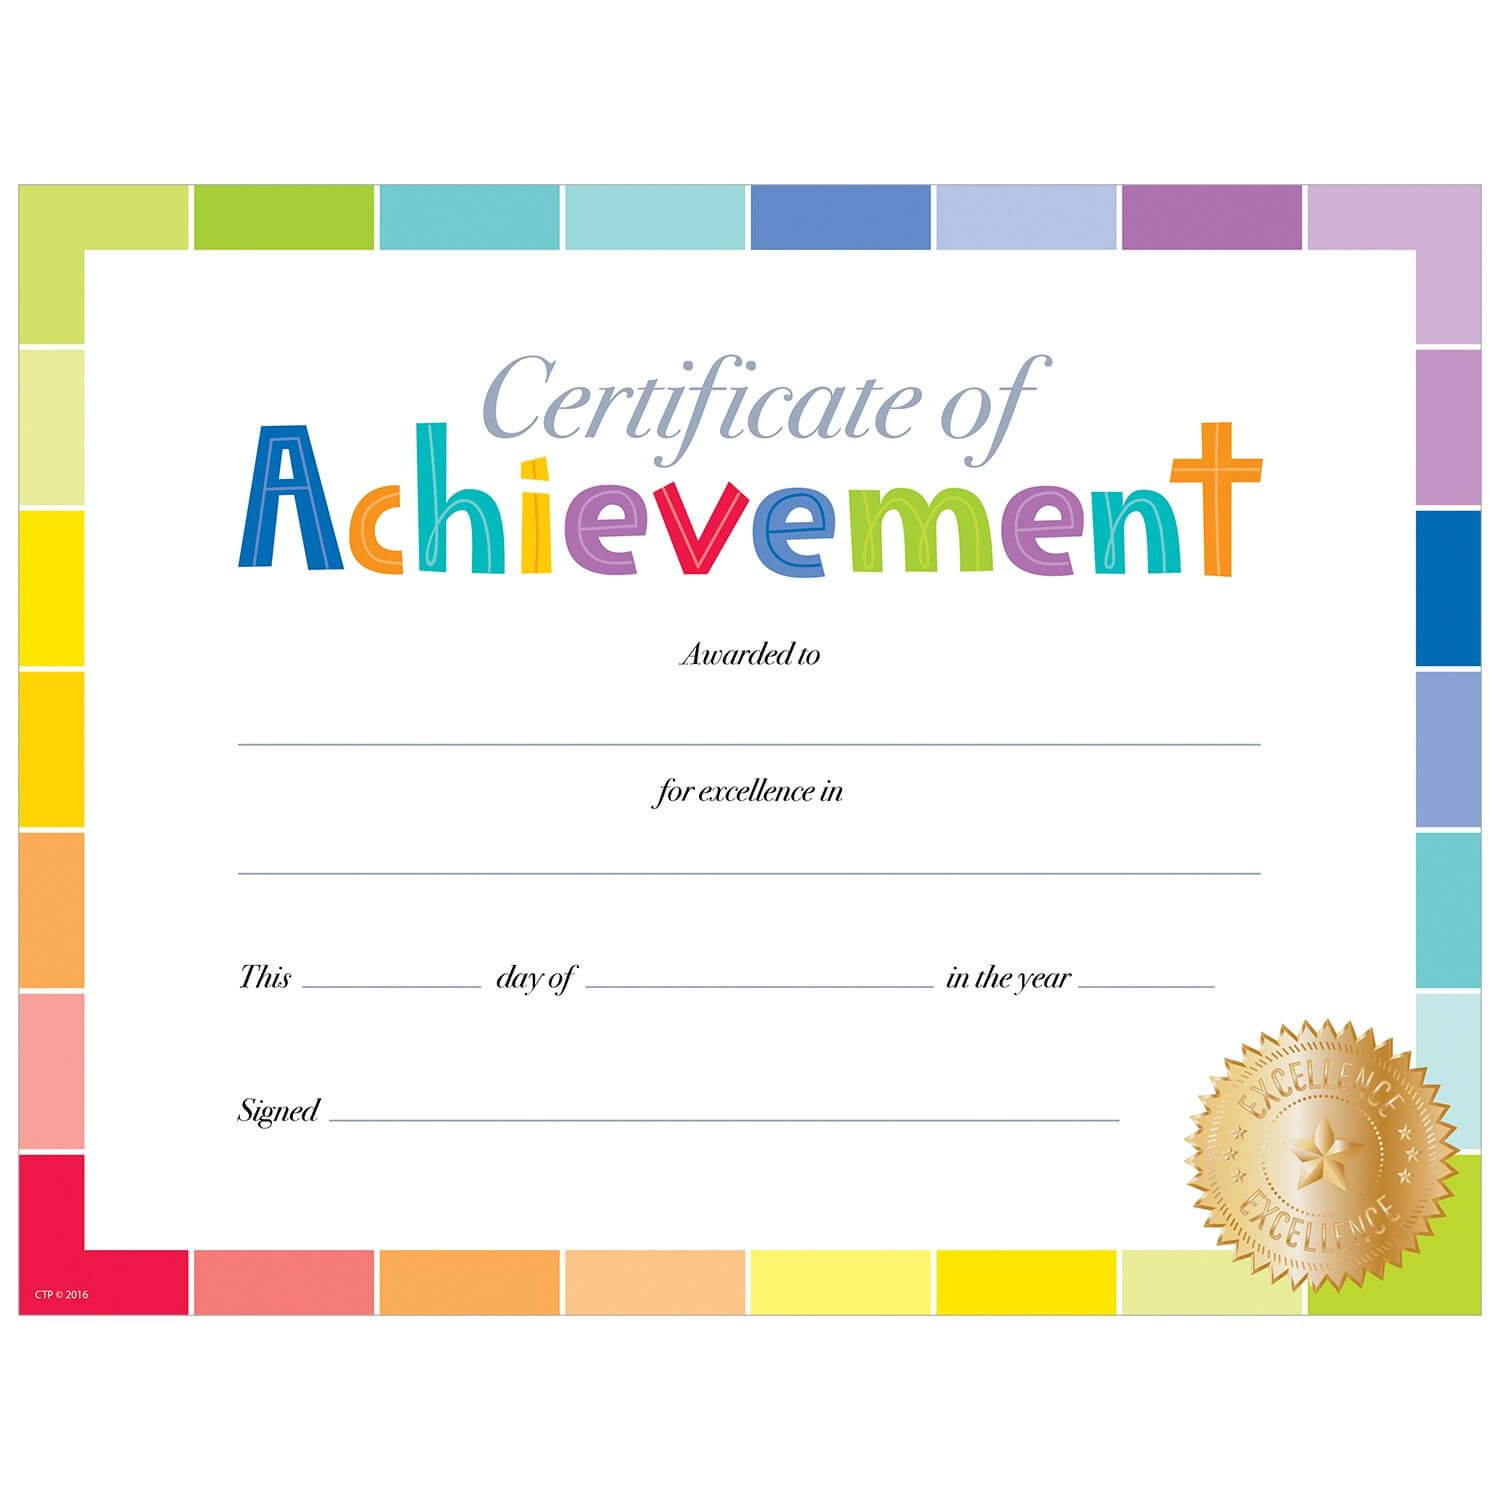 Award Certificates Kids Art - Google Search | Scmac Throughout Certificate Of Achievement Template For Kids